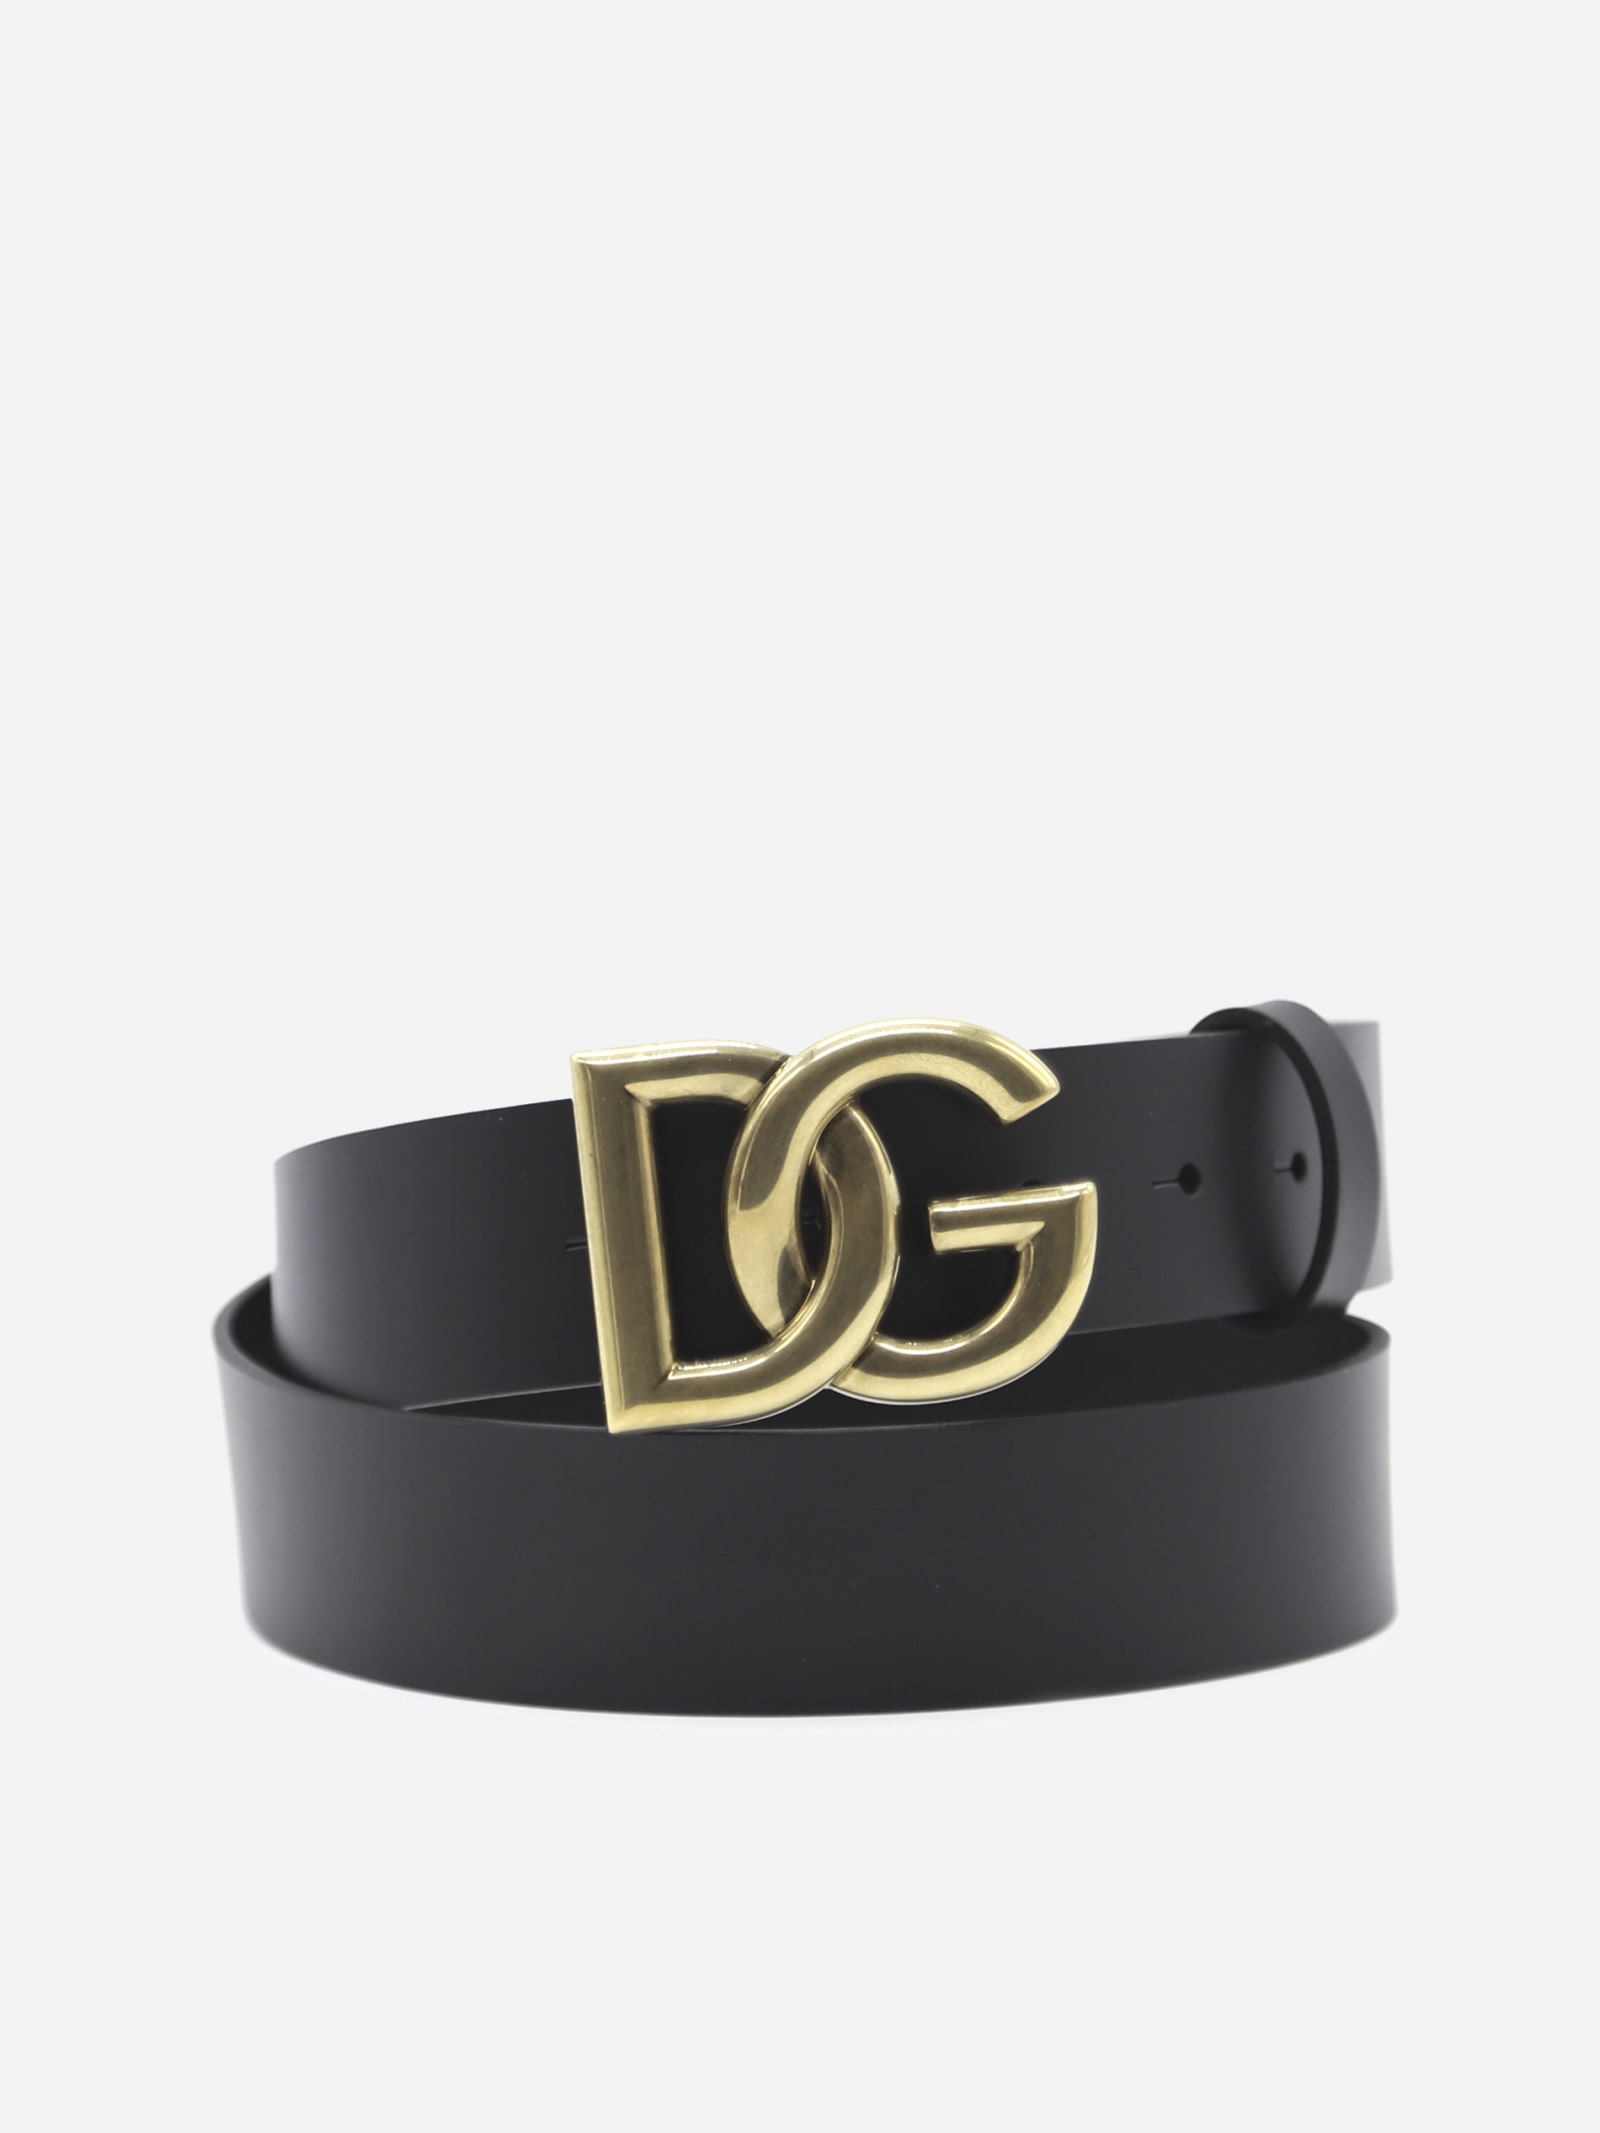 dolce & gabbana leather belt with dg logo